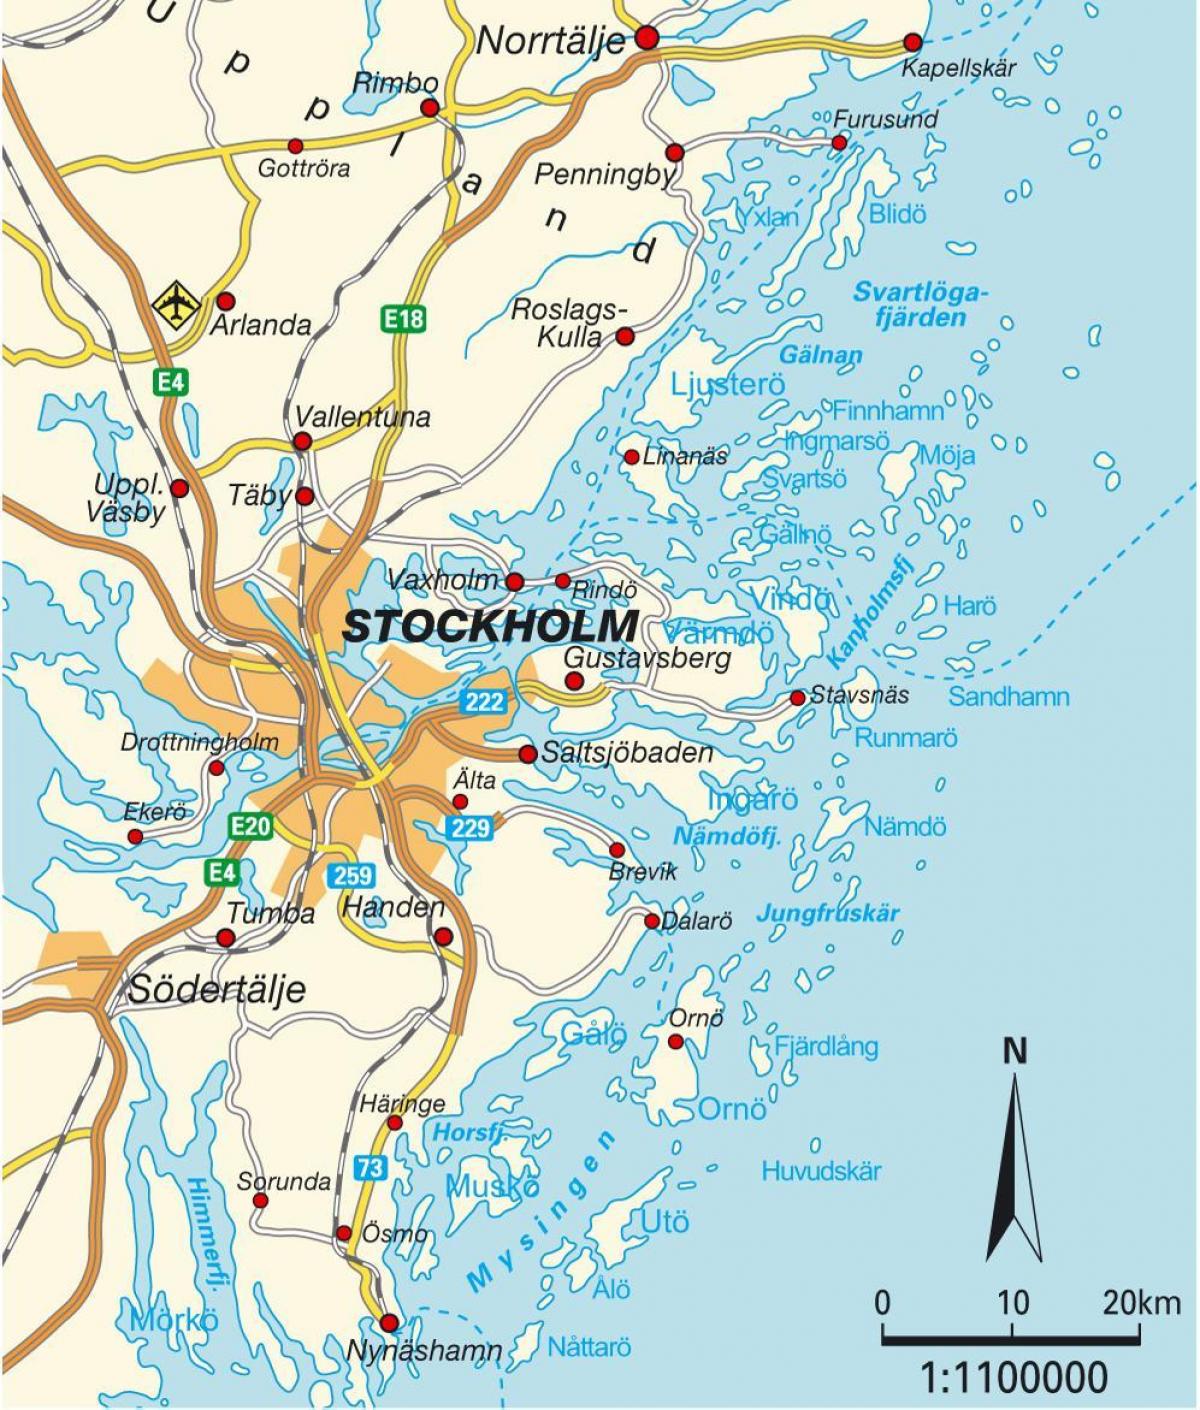 Stockholm auf der Karte